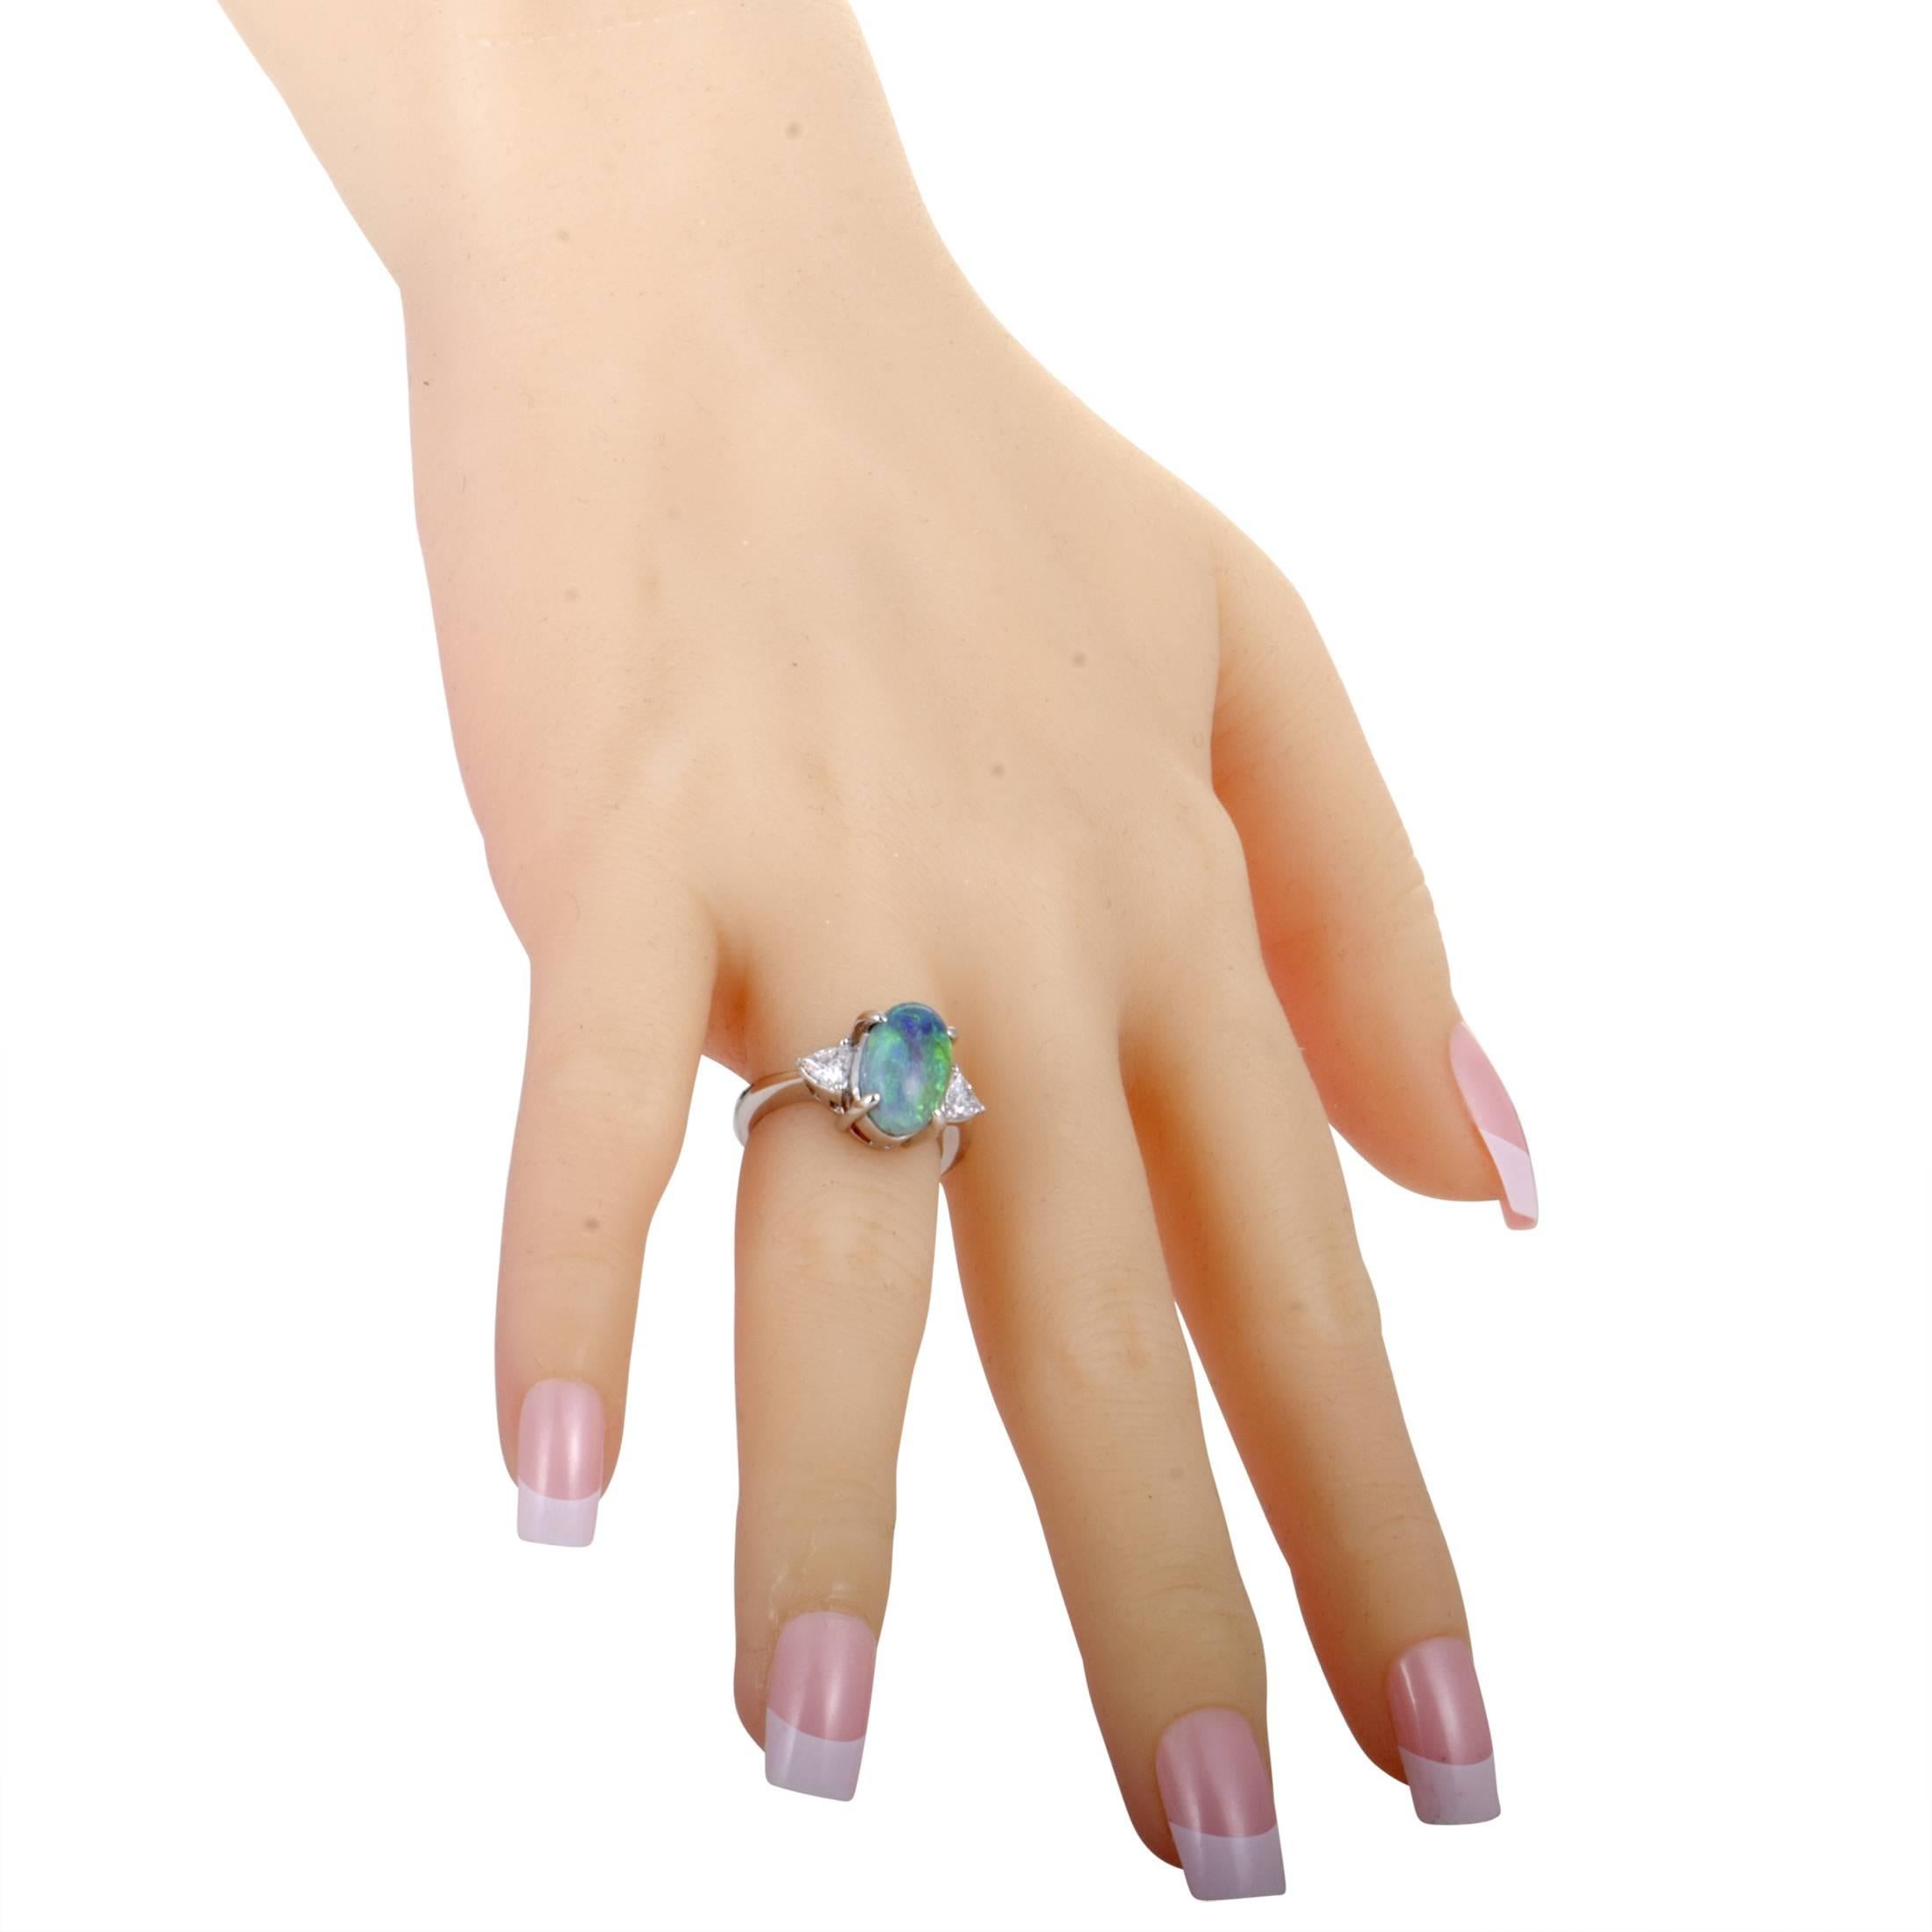 Women's Trillion Cut Diamonds and Green Opal Platinum Ring